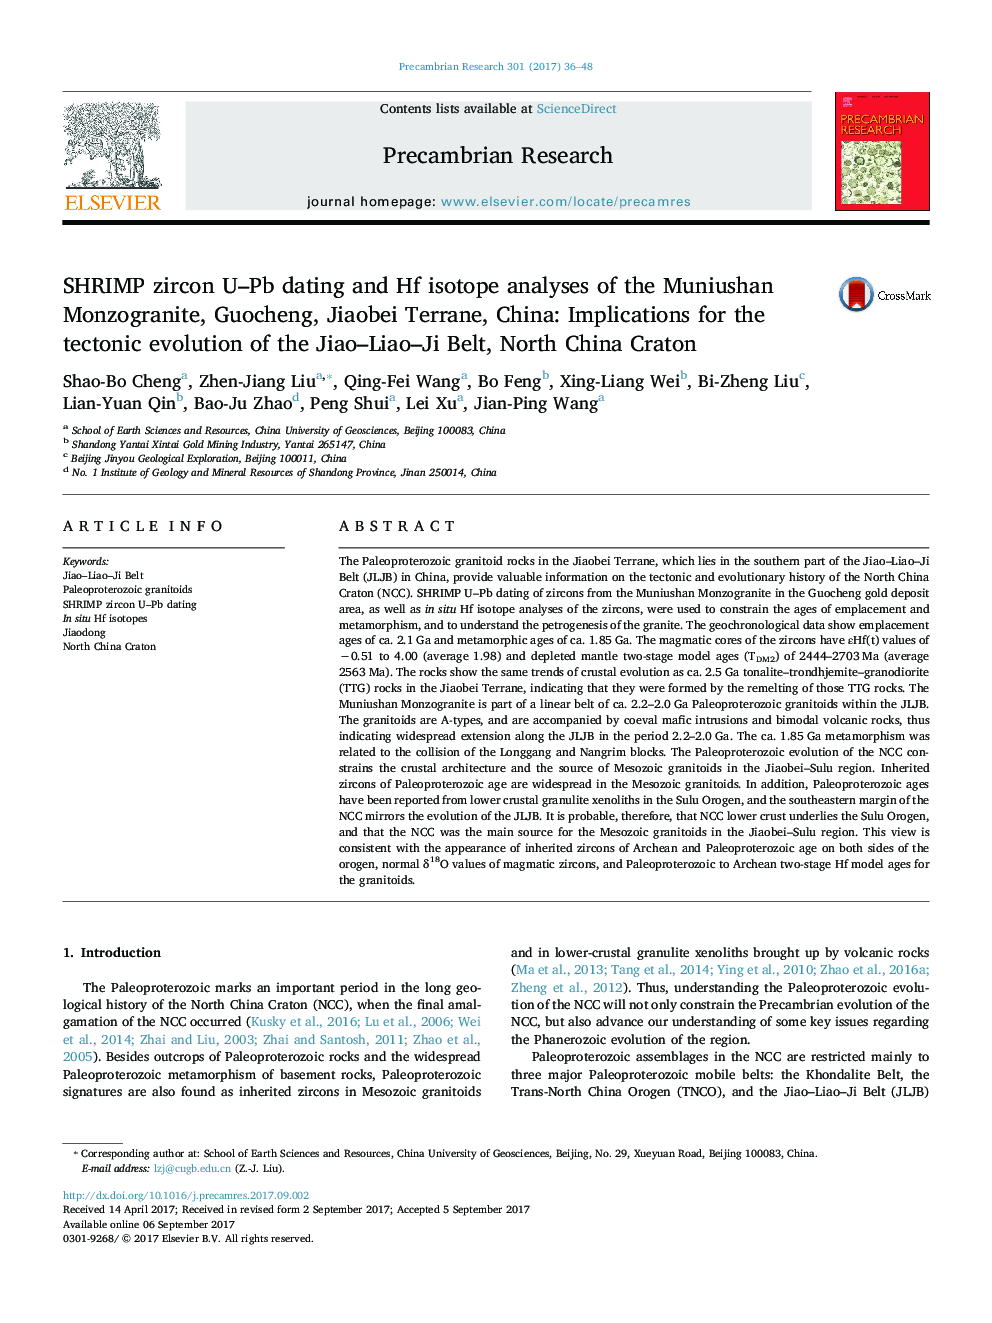 SHRIMP zircon U-Pb dating and Hf isotope analyses of the Muniushan Monzogranite, Guocheng, Jiaobei Terrane, China: Implications for the tectonic evolution of the Jiao-Liao-Ji Belt, North China Craton